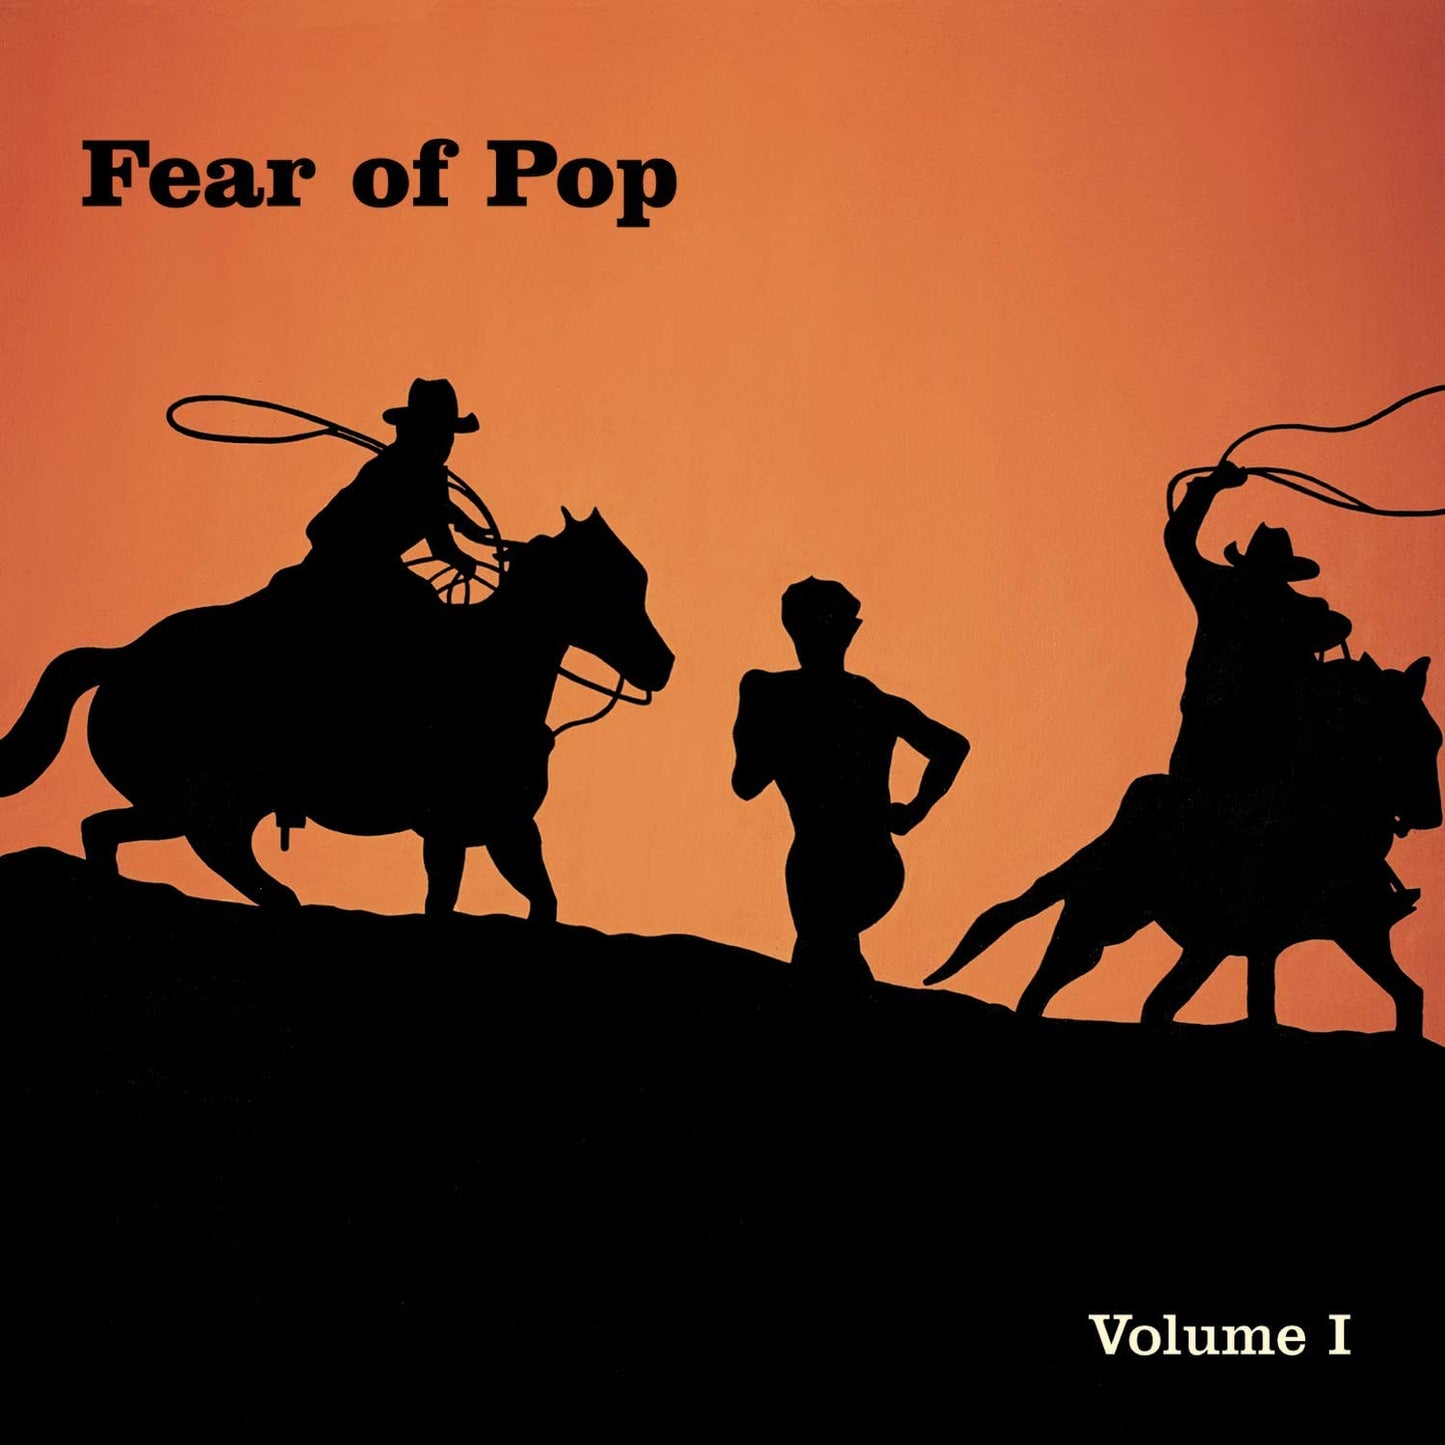 Volume 1 [Audio CD] FEAR OF POP